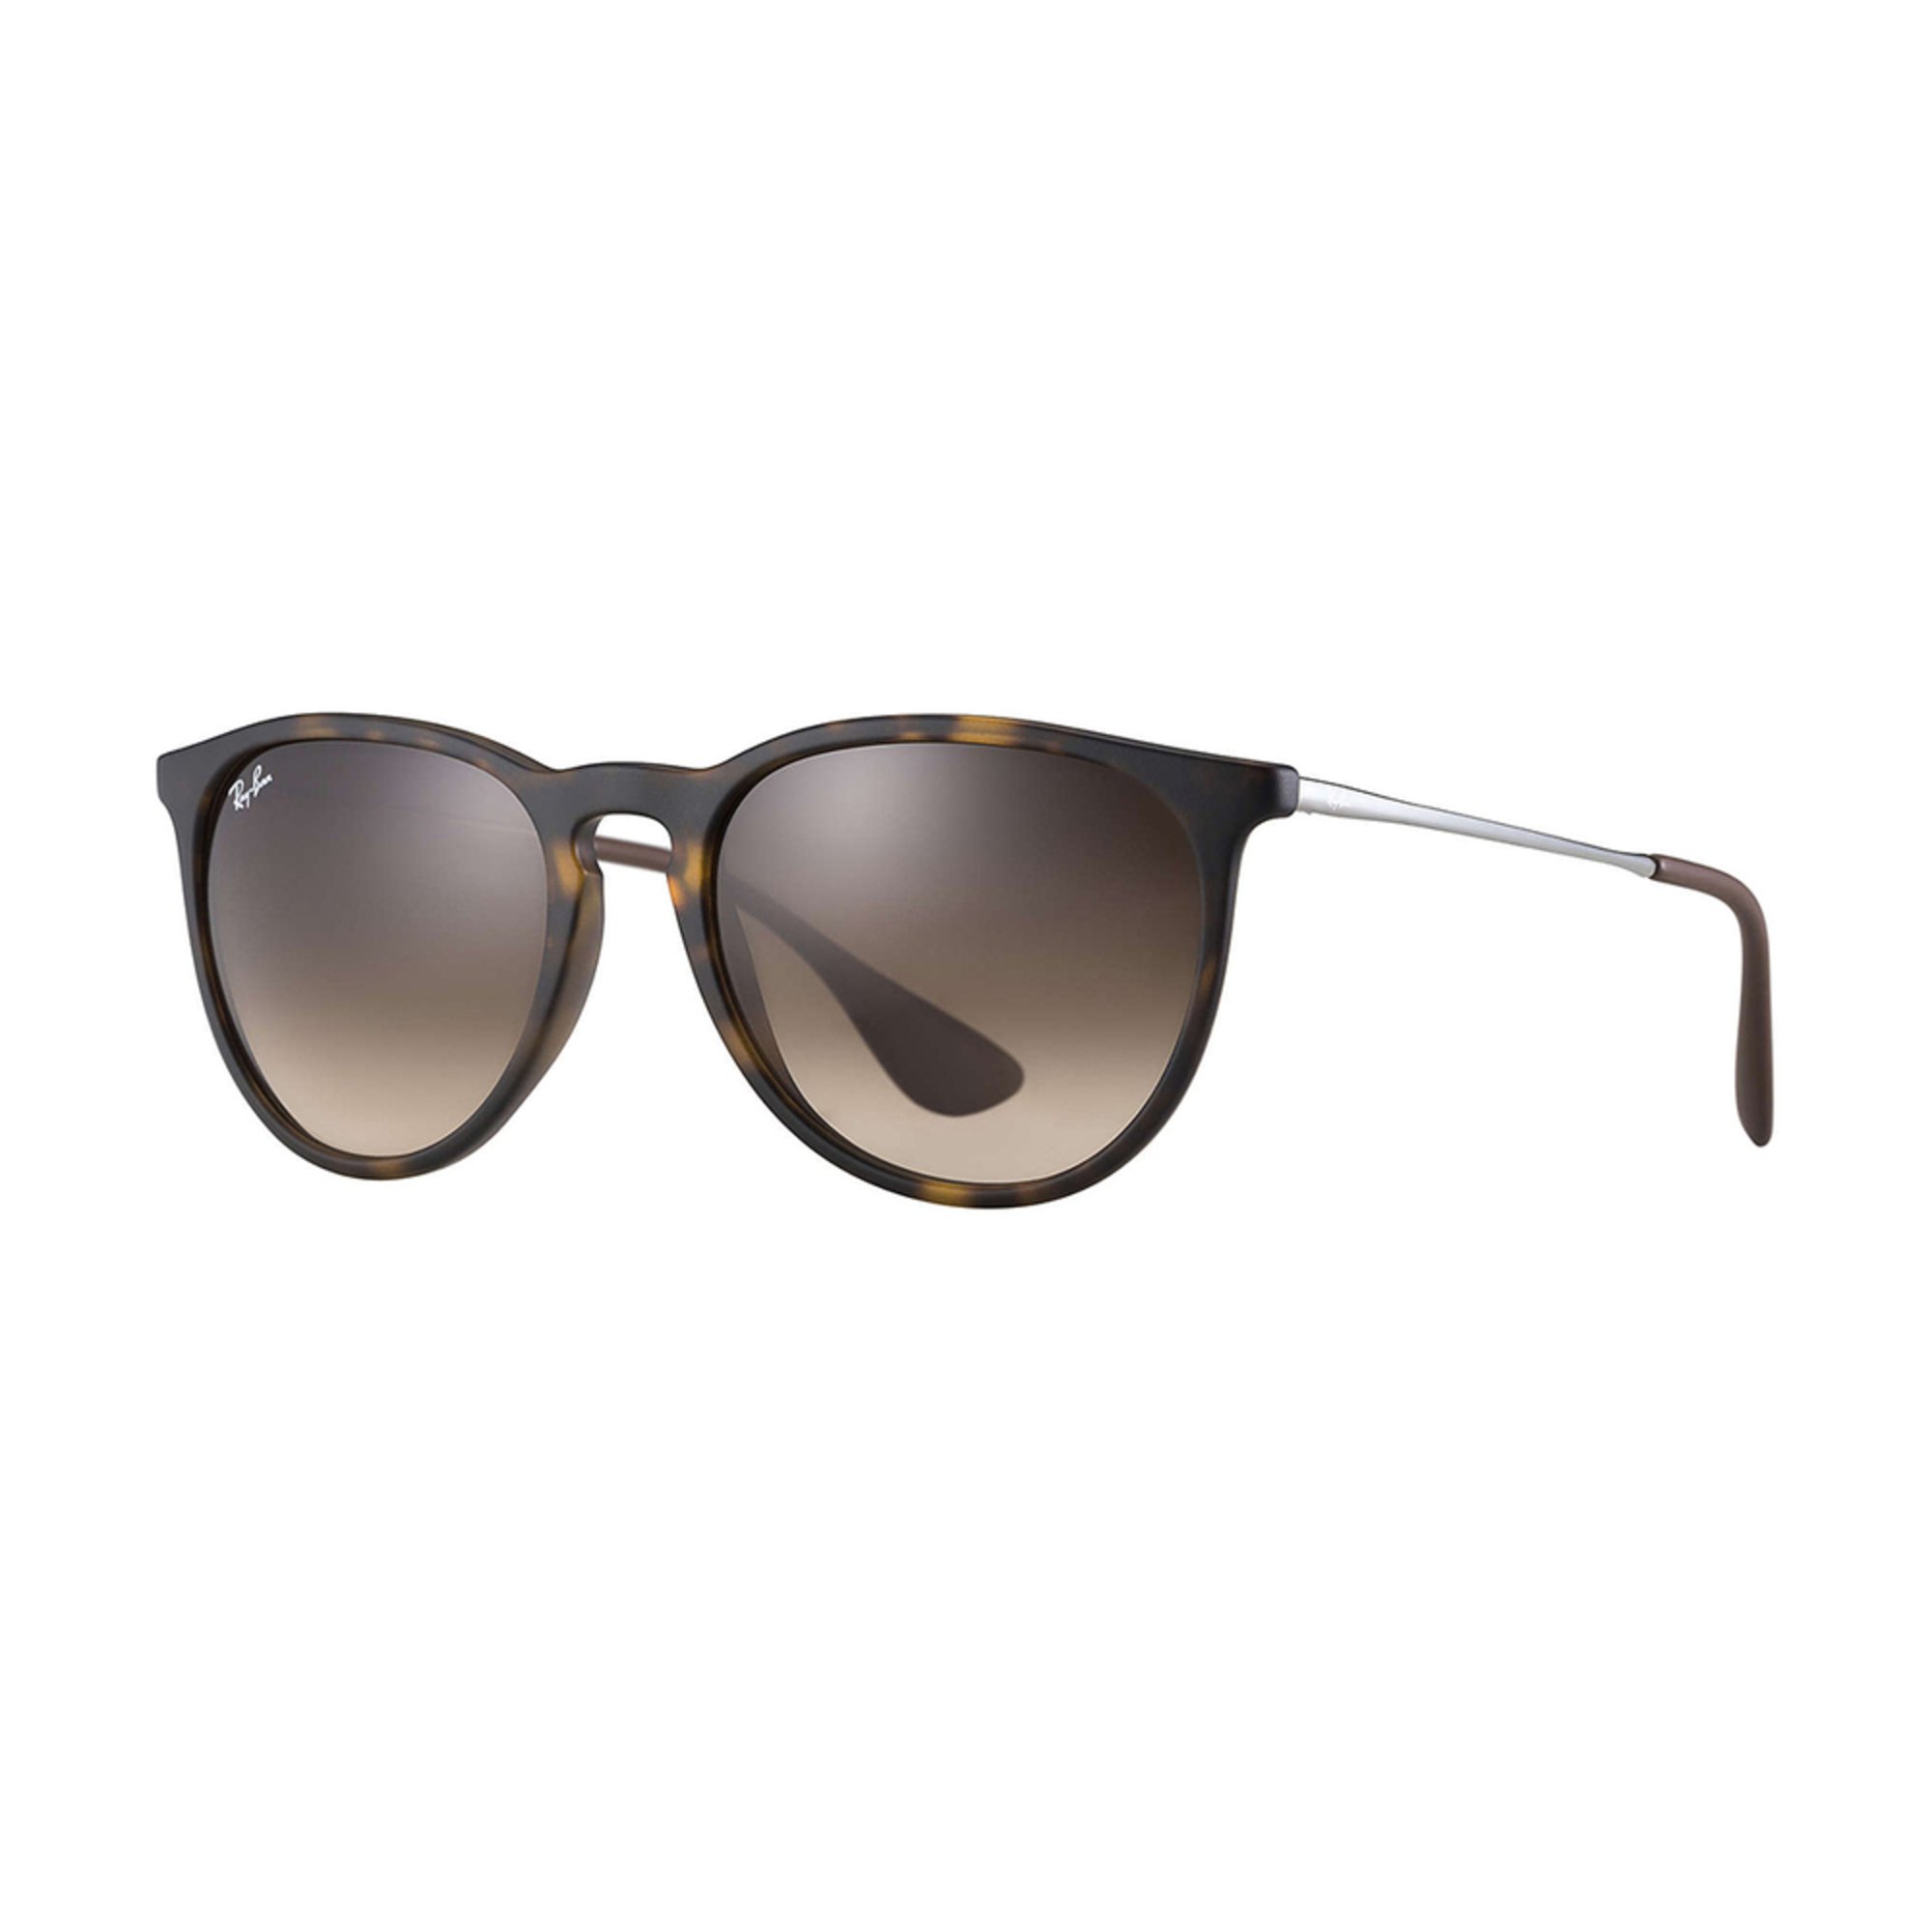 Ray-ban Unisex Erika Classic Sunglasses Tortoise/gunmetal/brown ...